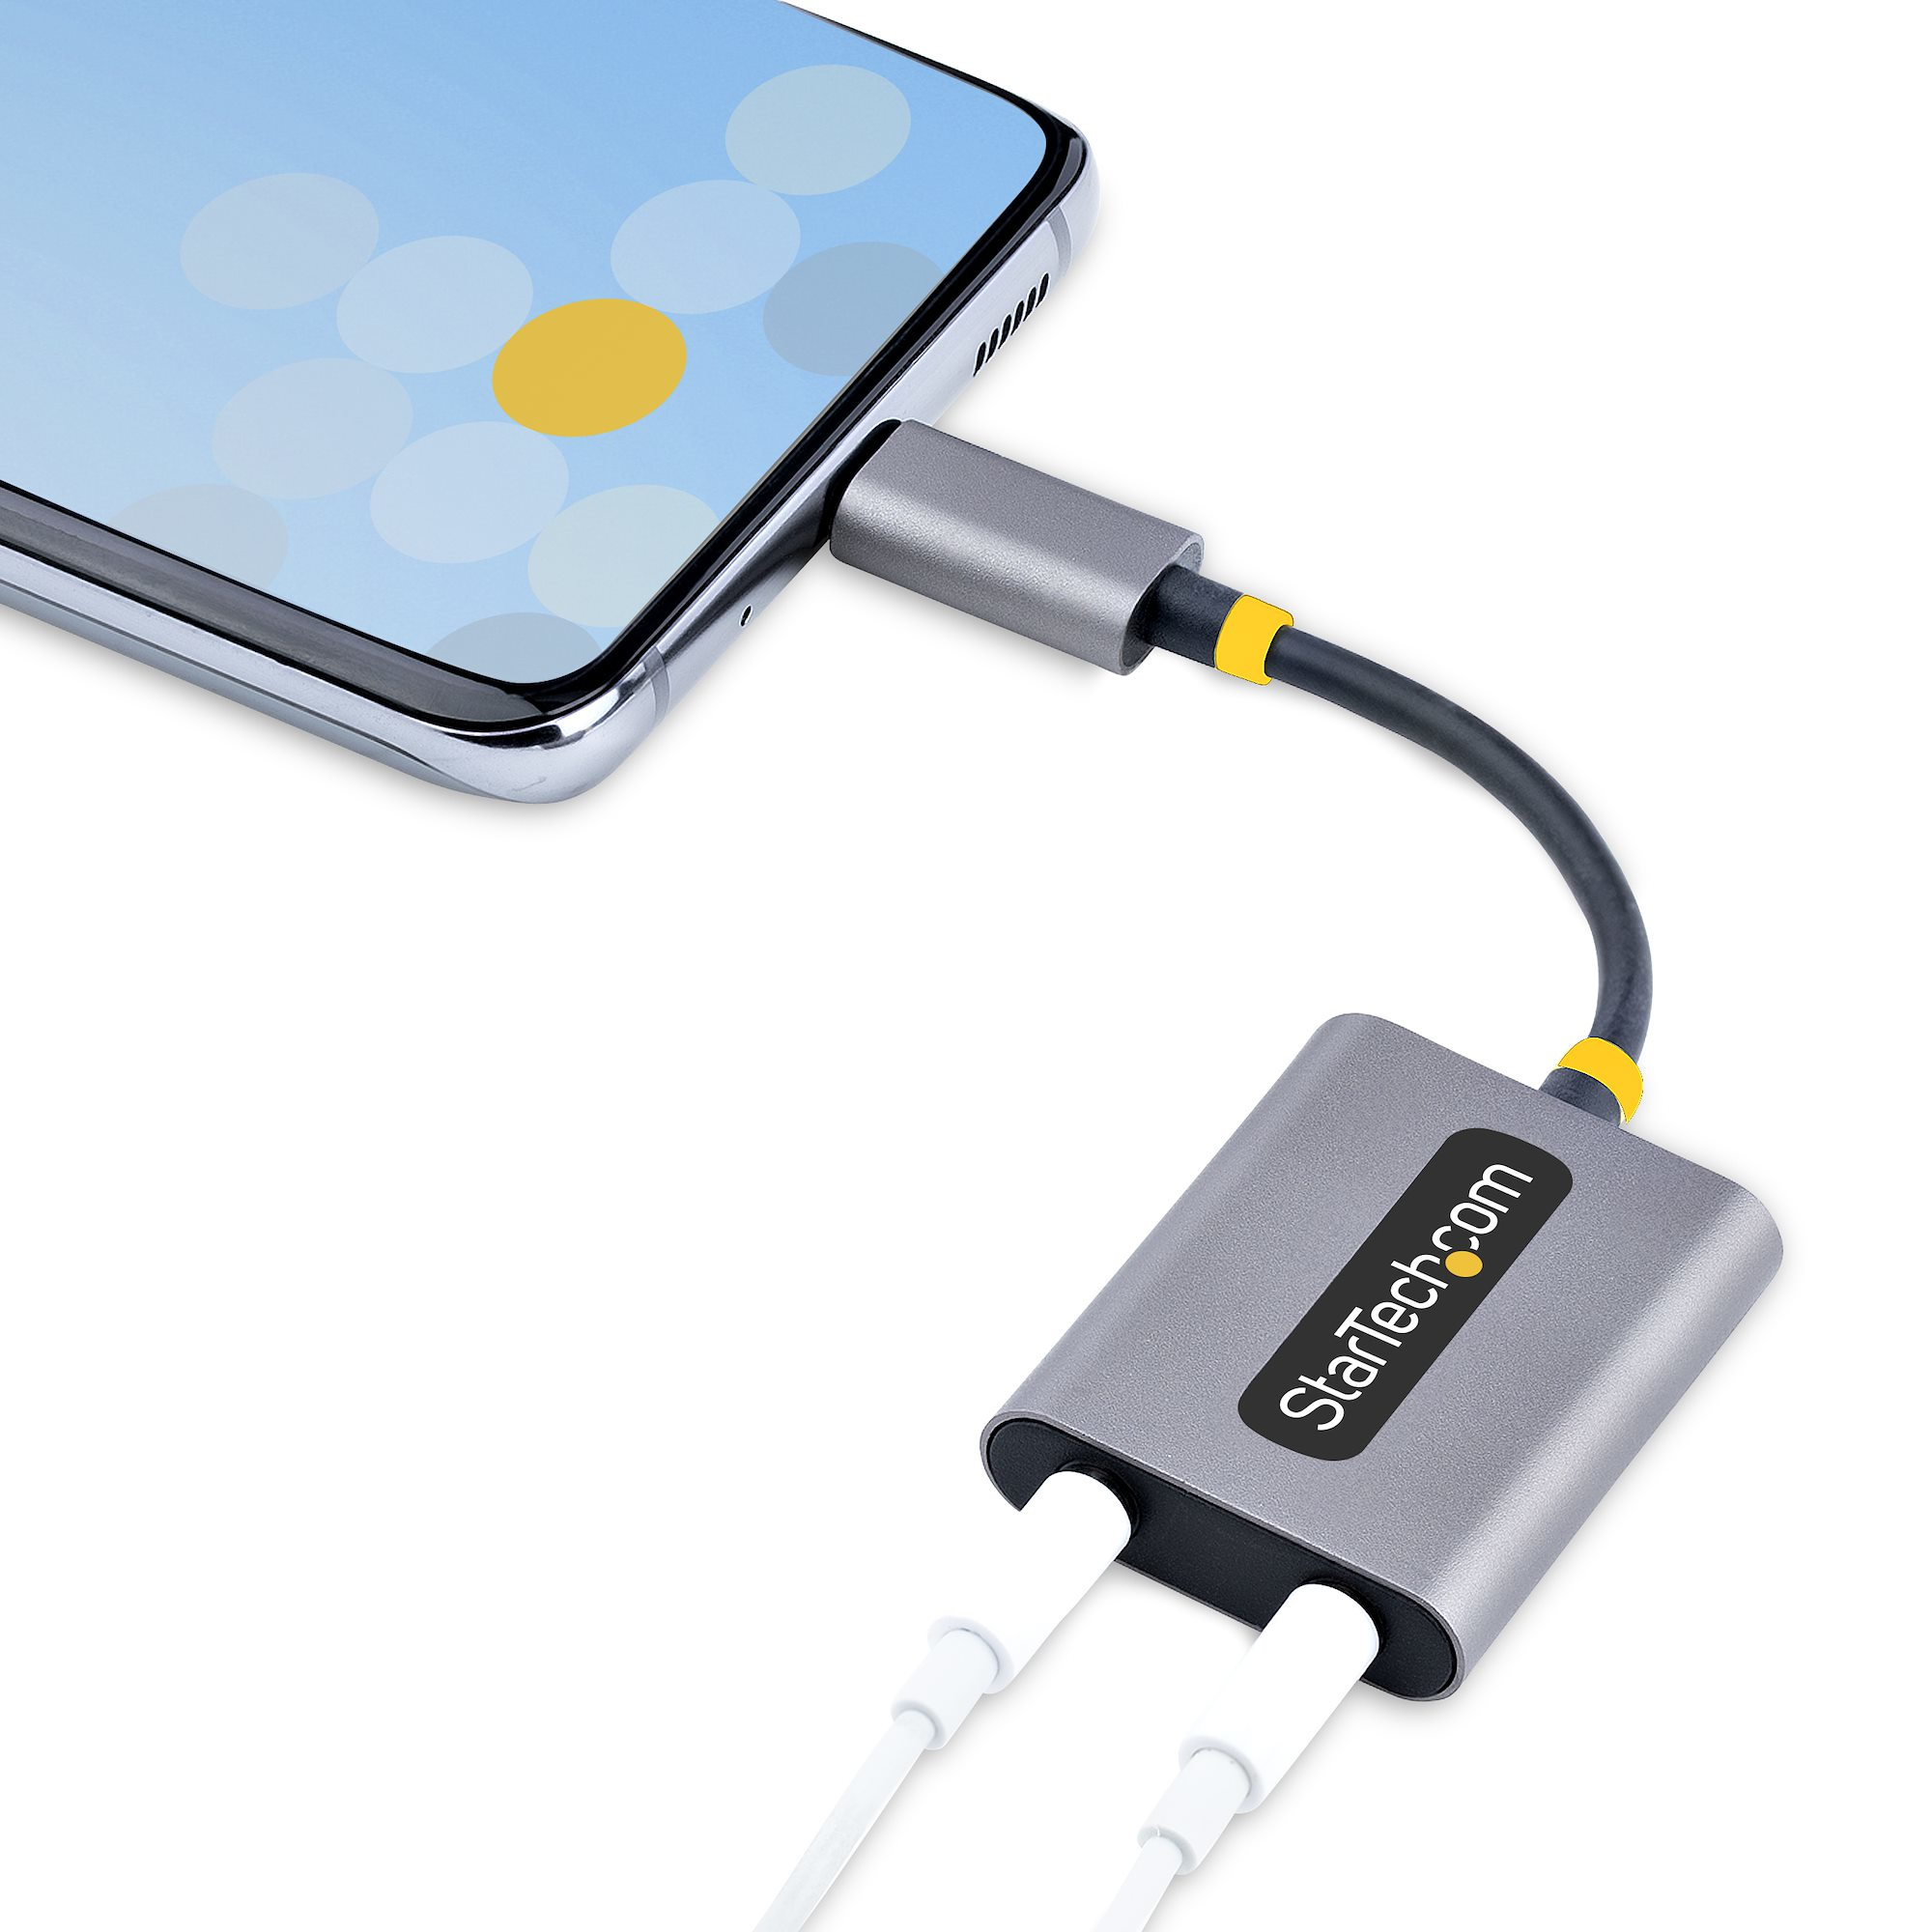 Adattatore audio USB, adattatore jack audio da USB a 3,5 mm, adattatore  audio per scheda audio esterna USB con jack per cuffie e microfono da 3,5  mm (nero / 20 cm)